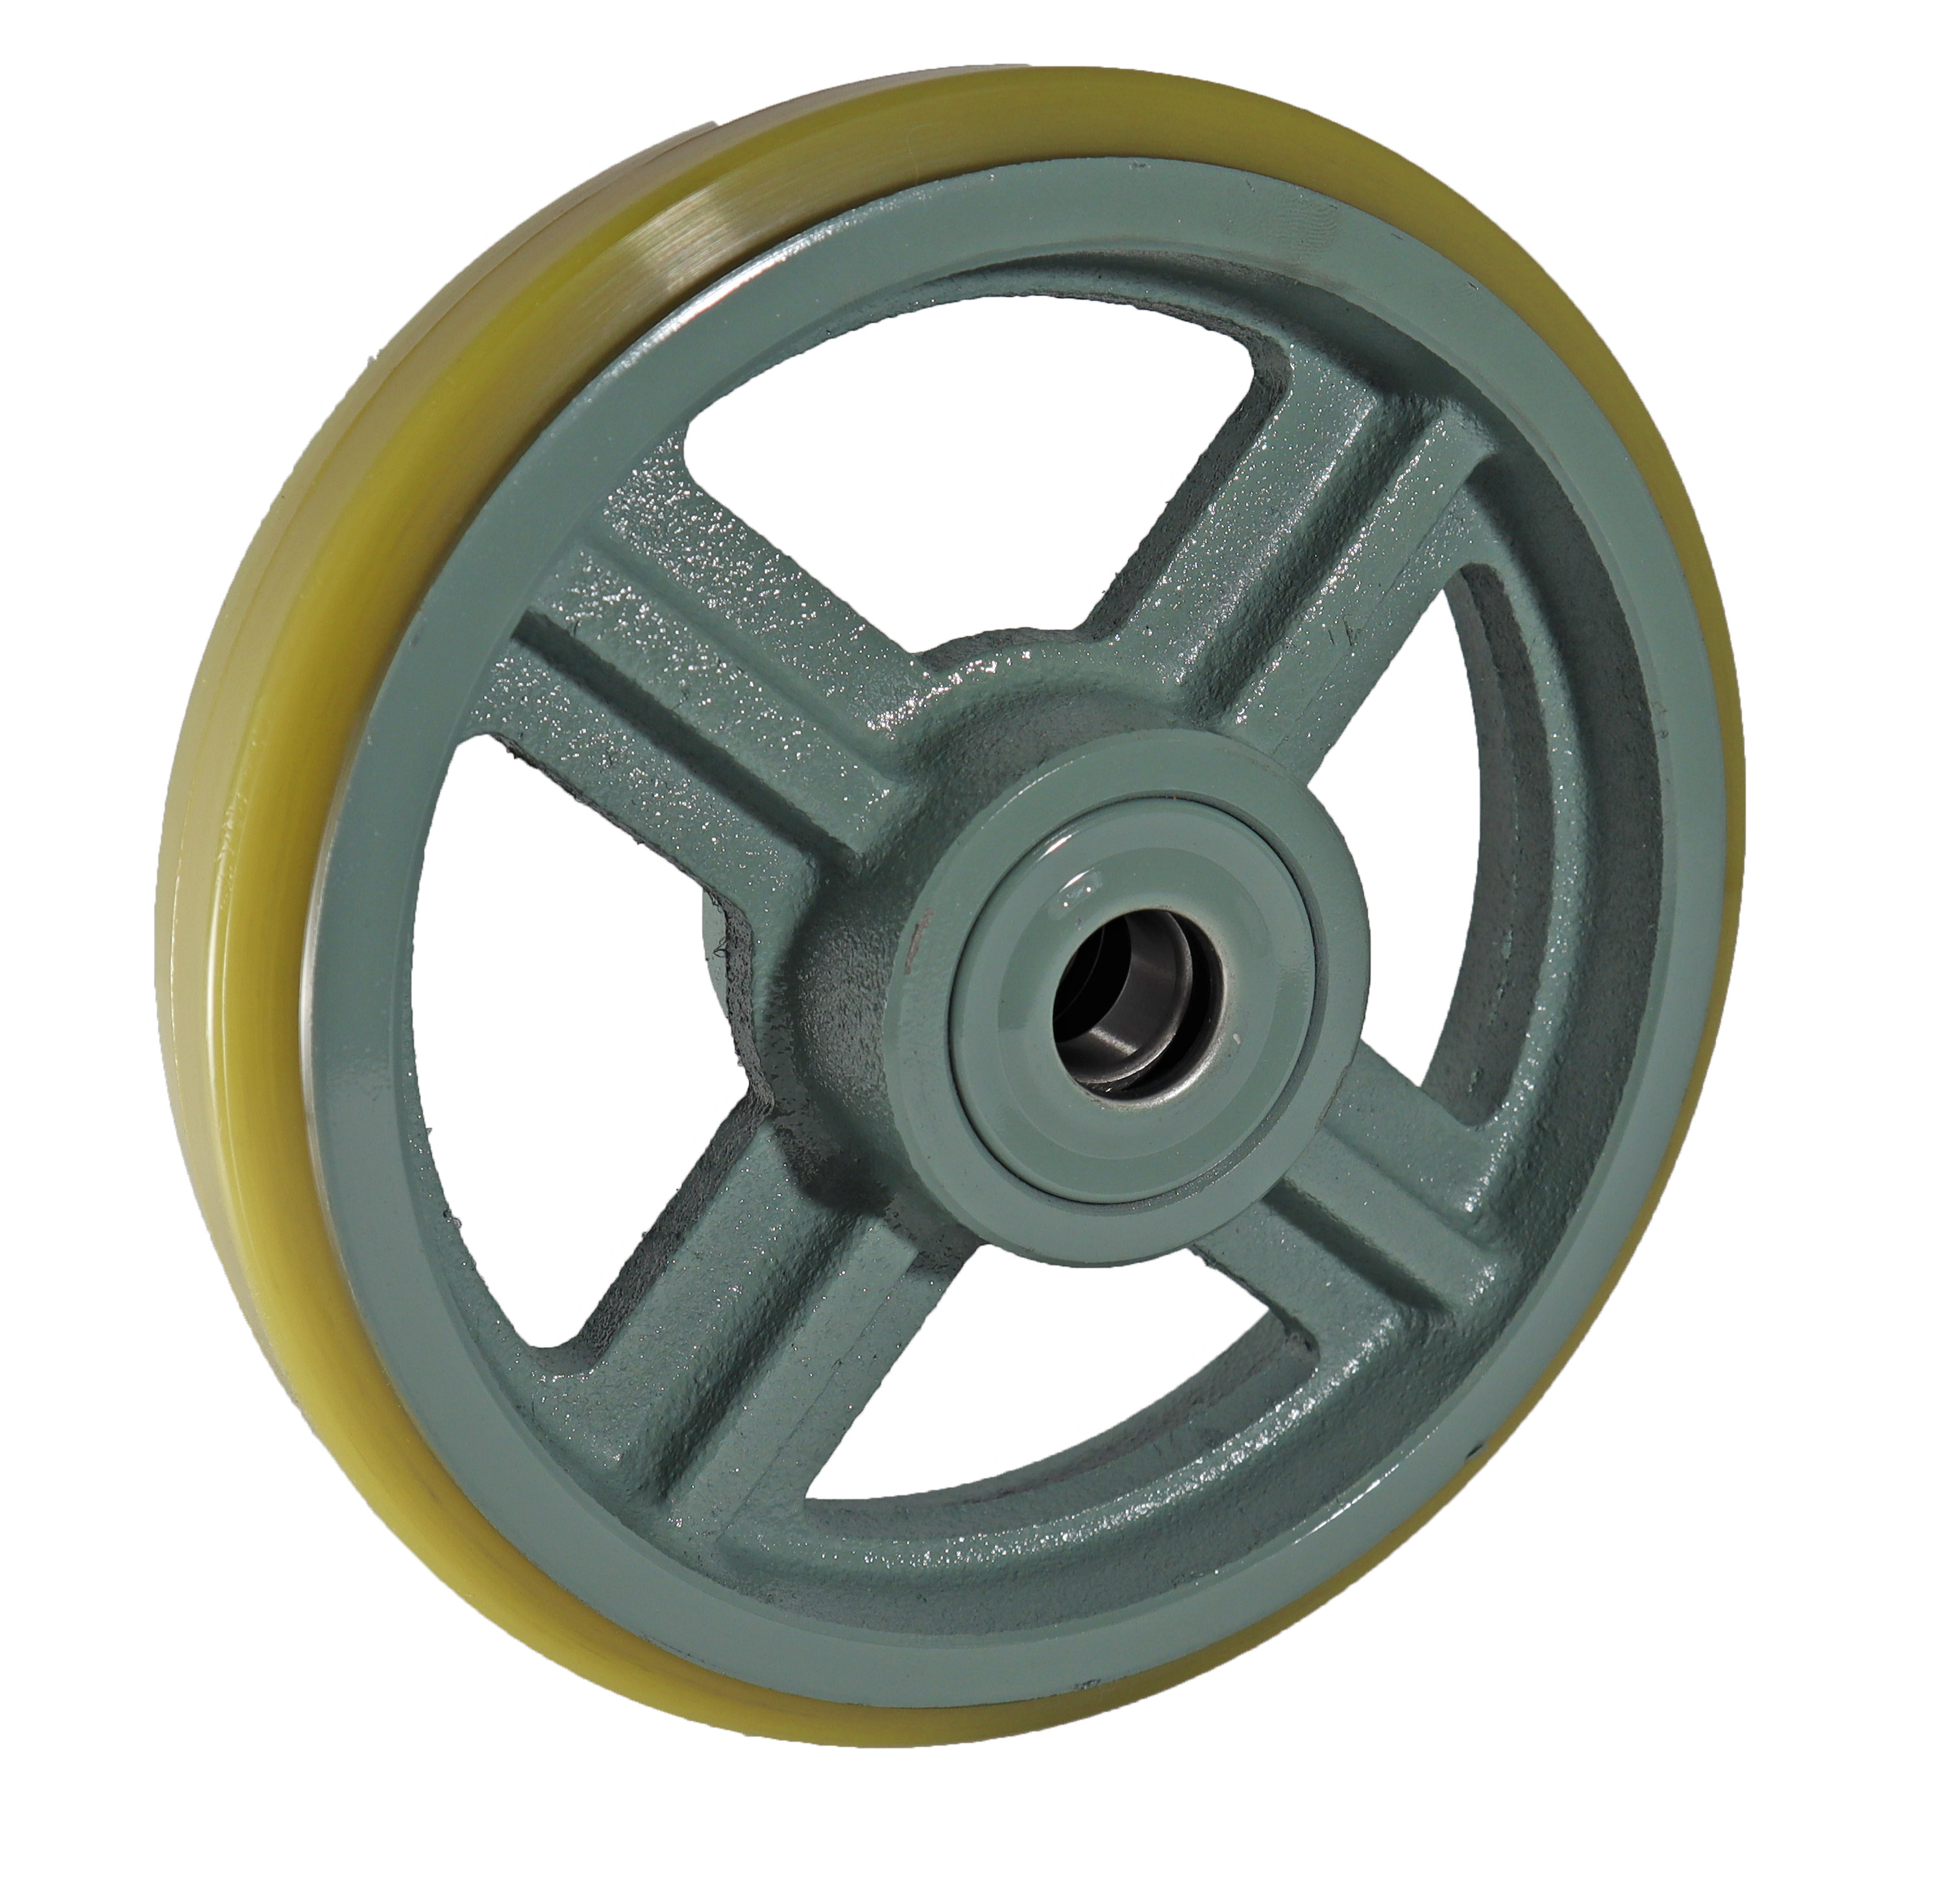 Pinalloy Universal 8 Meter (8M) TPE Made Car Wheel Trim Ring Shell Rin